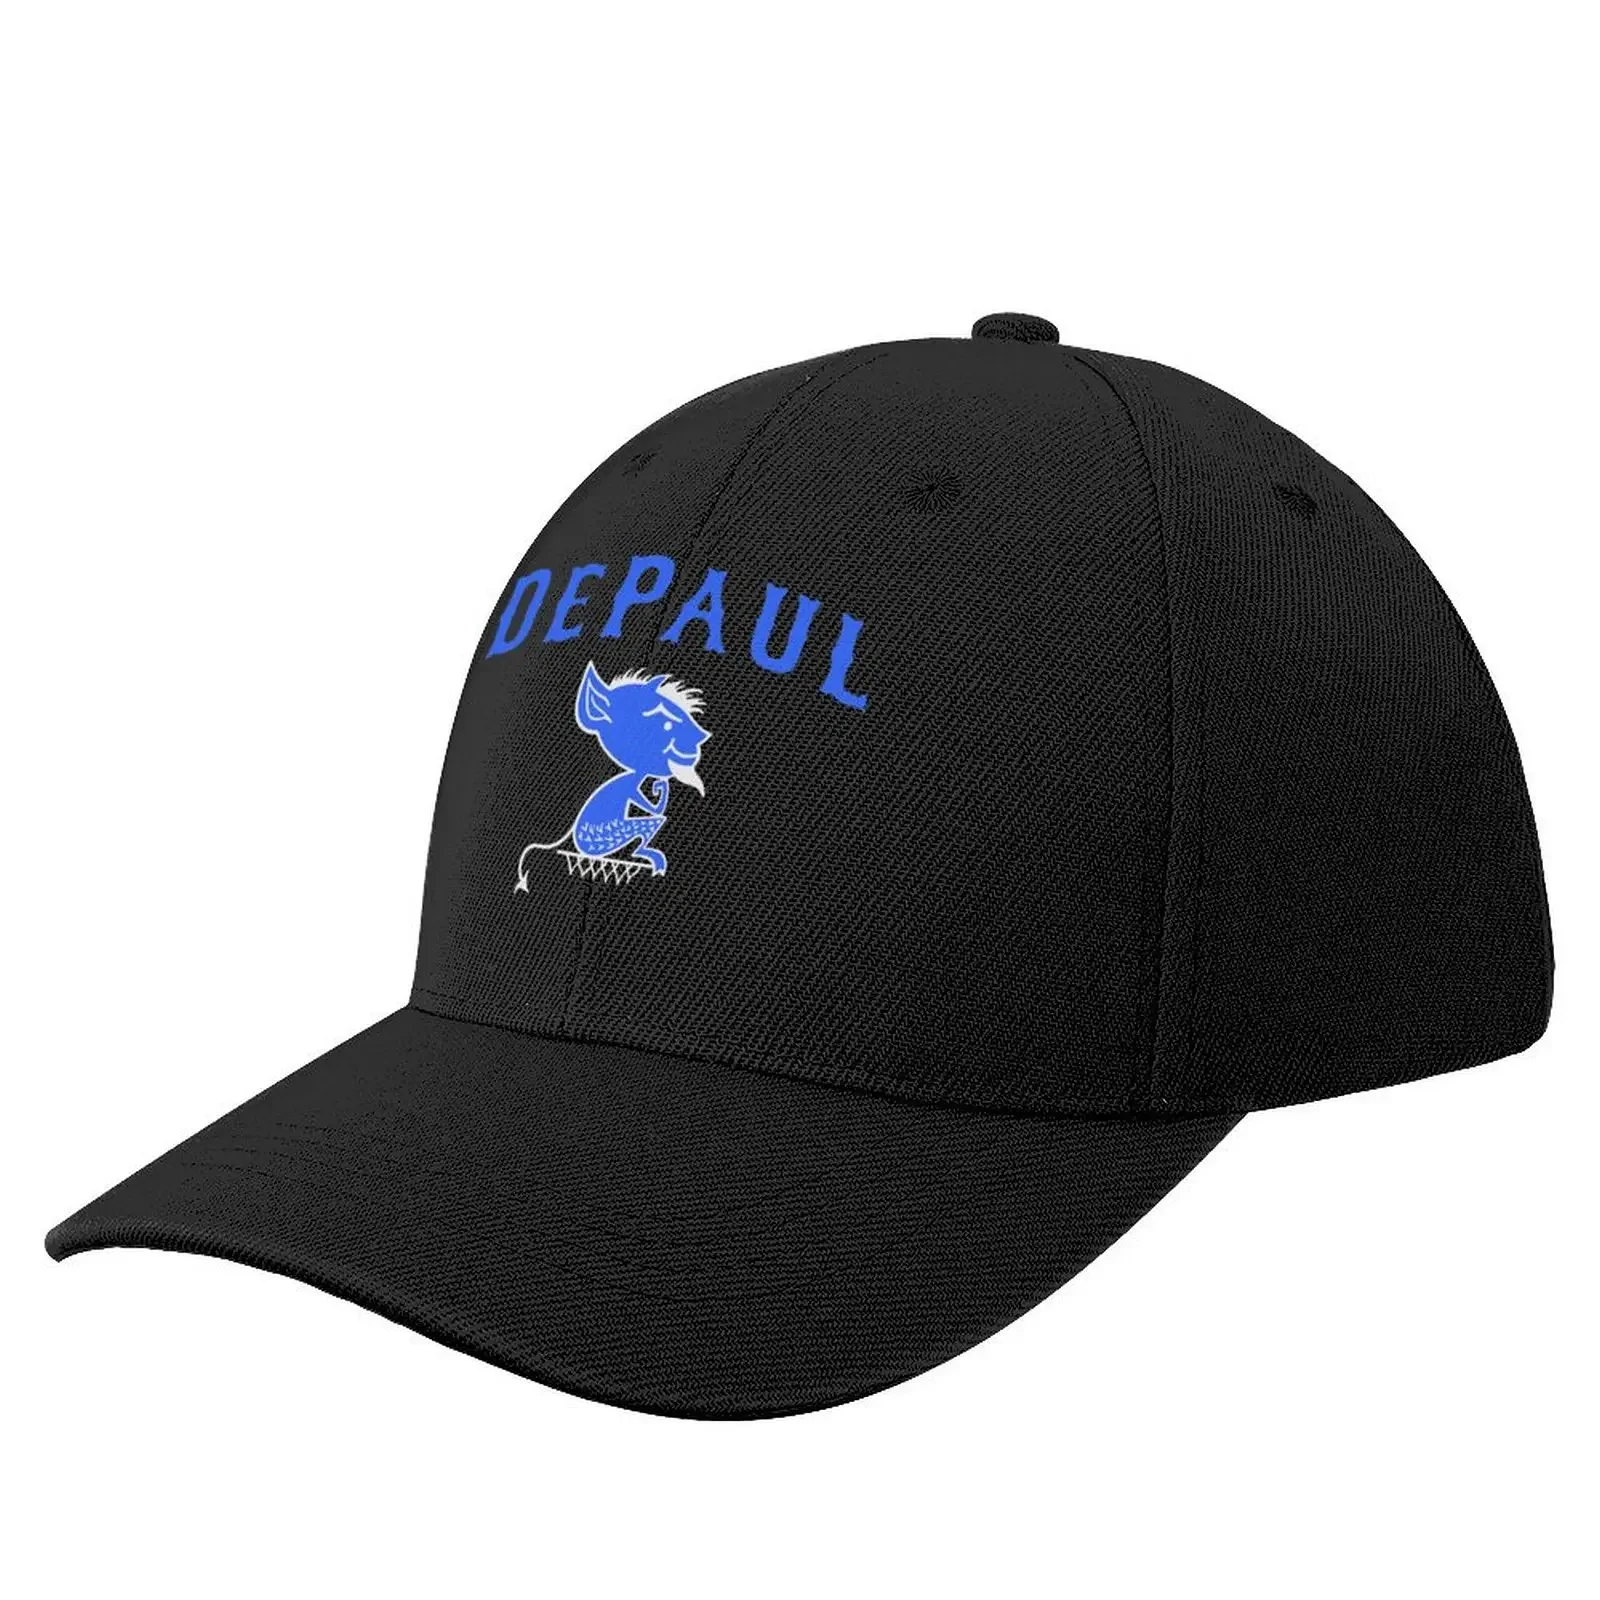 

DePaul Retro Vintage Mascot Design Baseball Cap Military Cap Man Rave Women's Golf Wear Men's